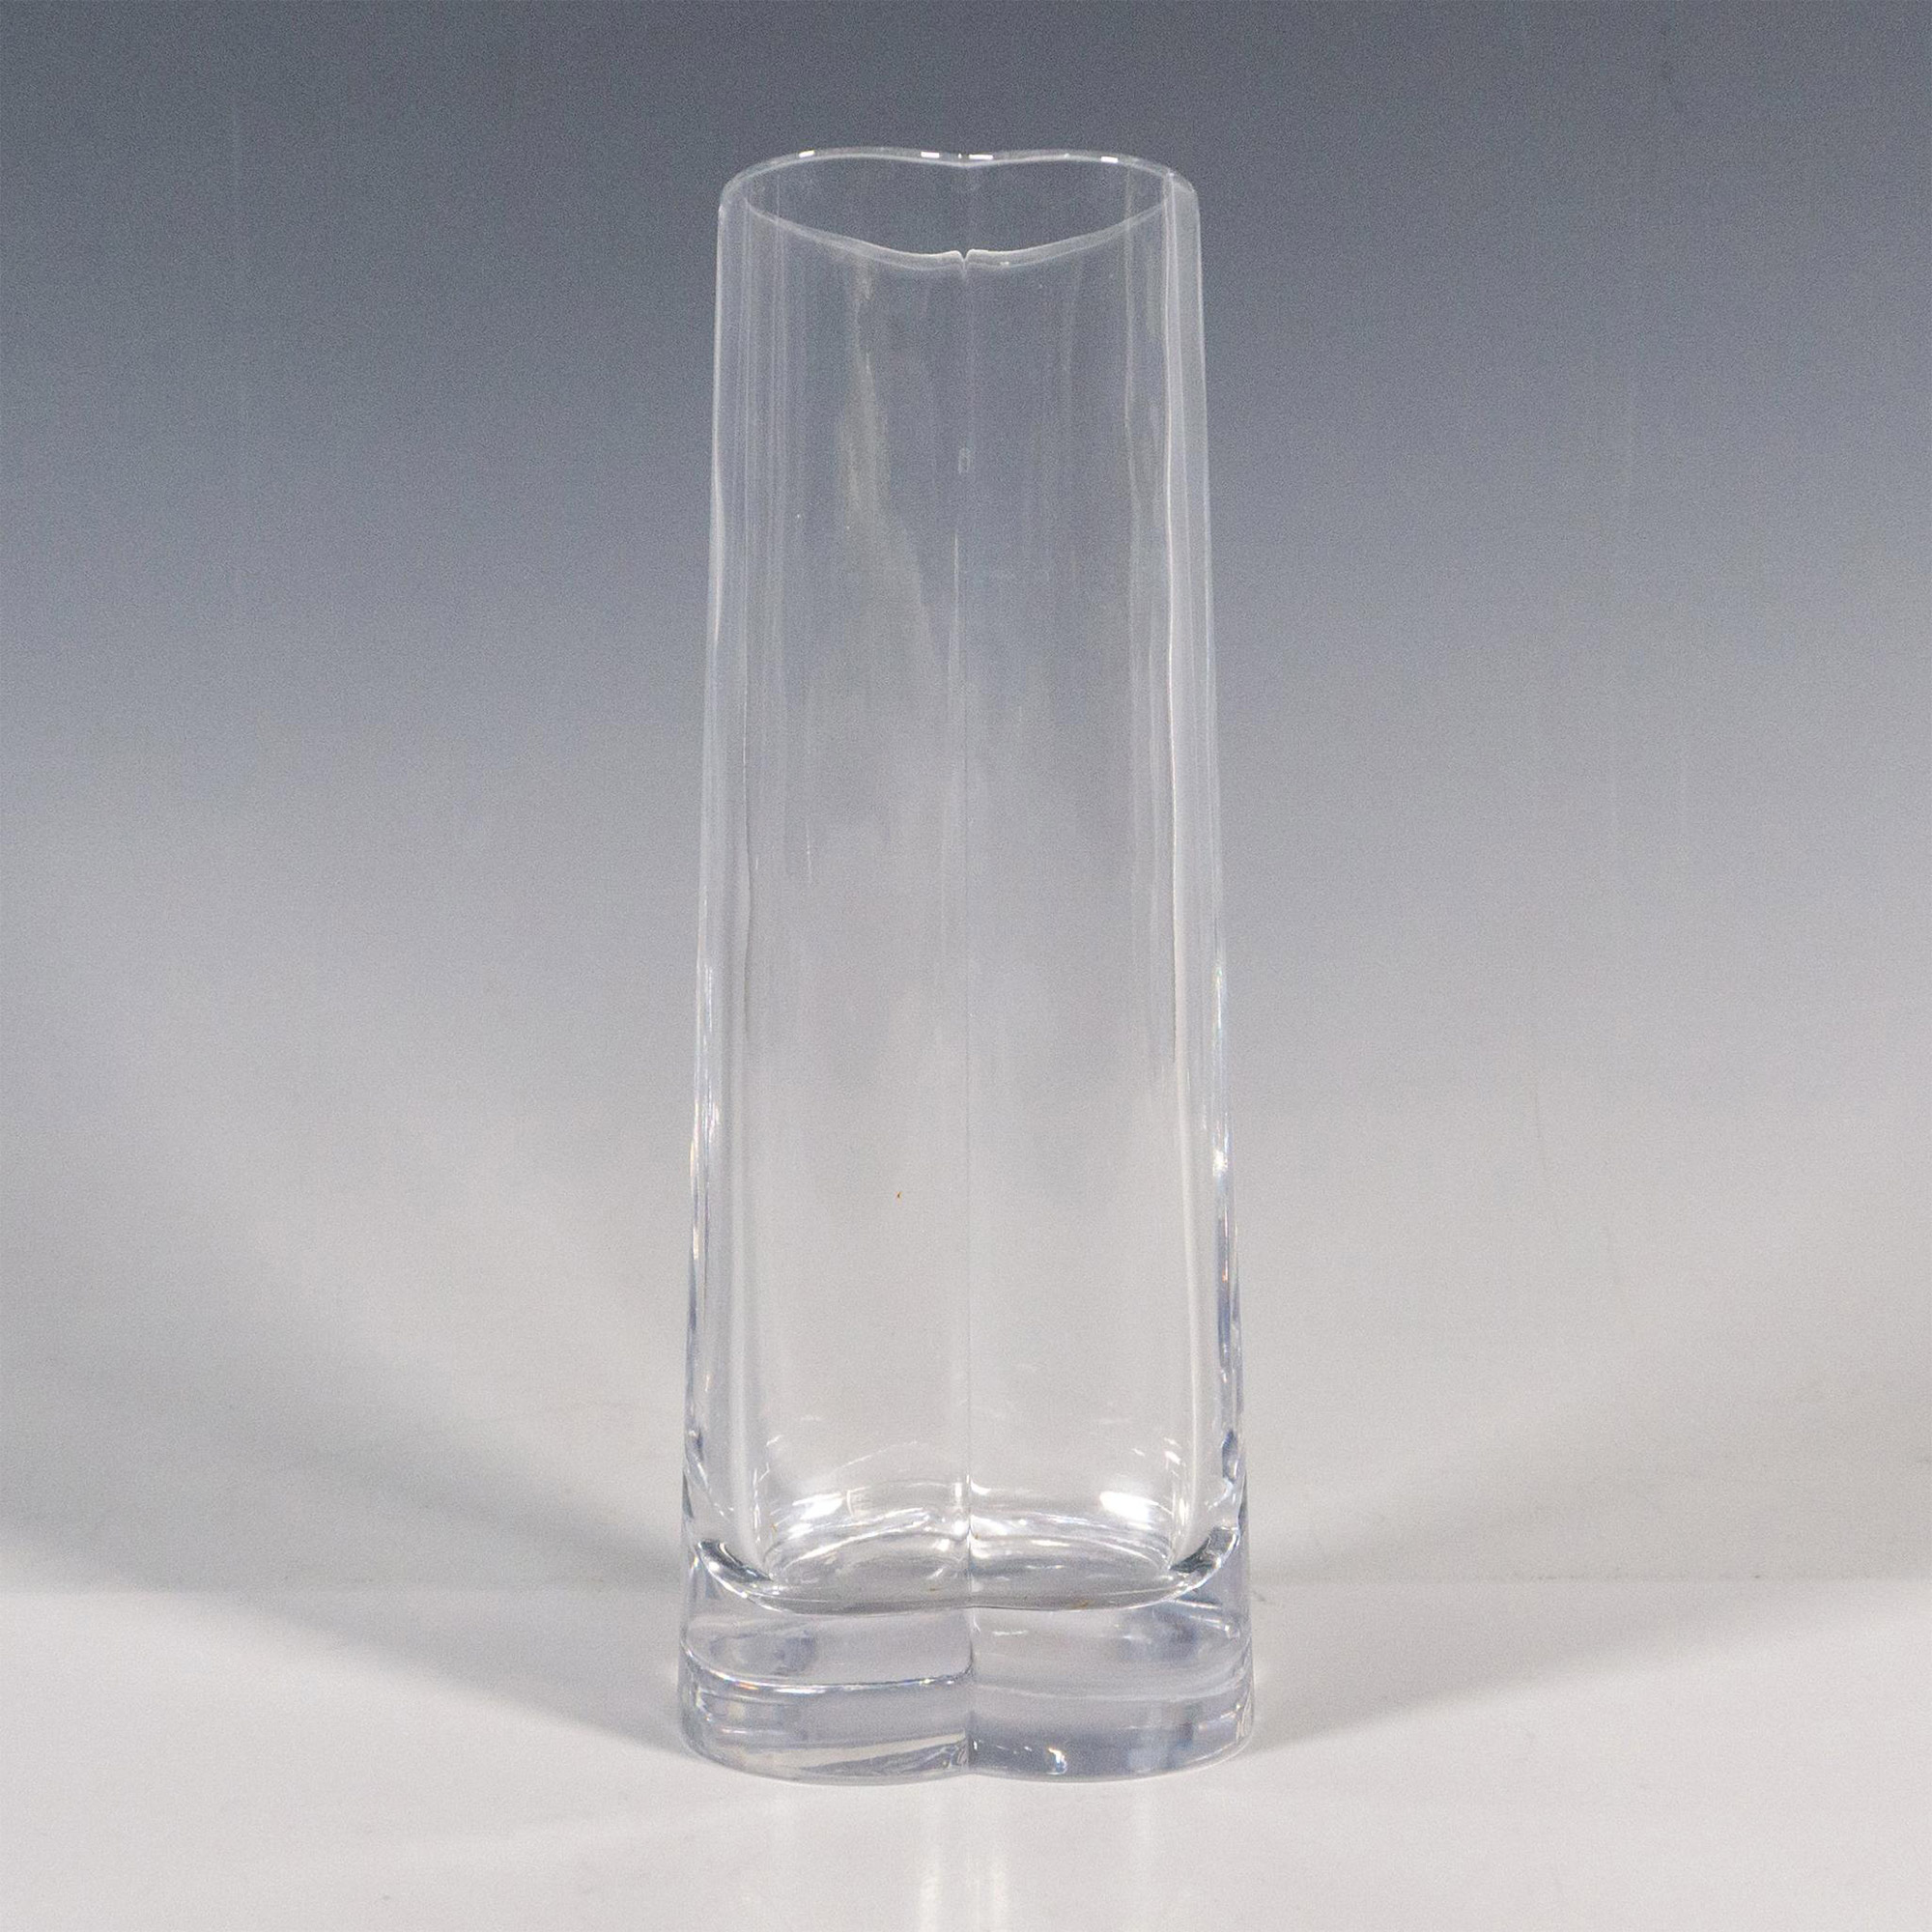 Orrefors Crystal Heart Shaped Vase - Image 2 of 3